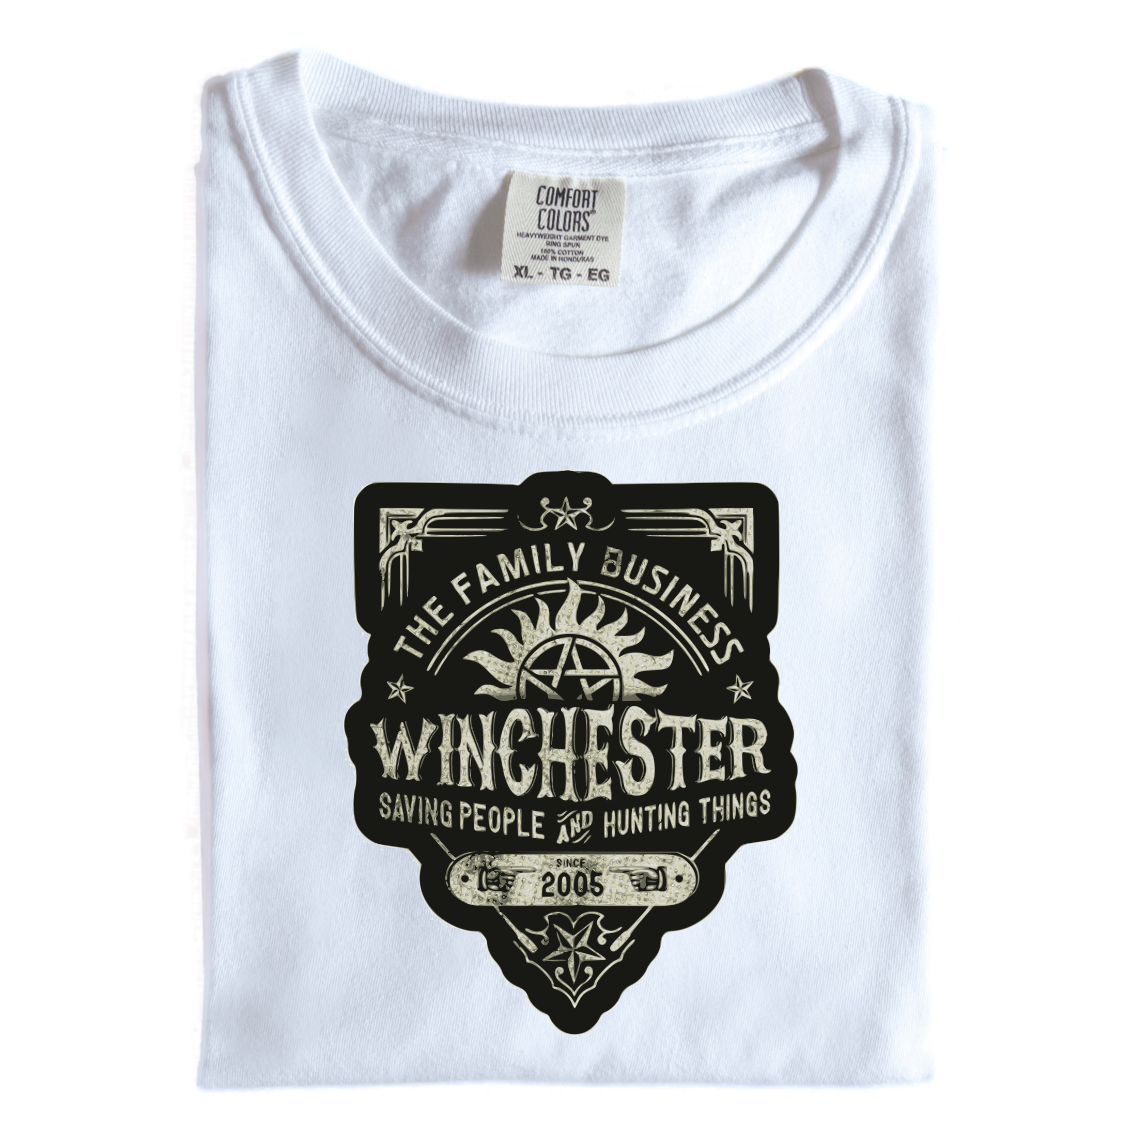 The Winchester Sigil